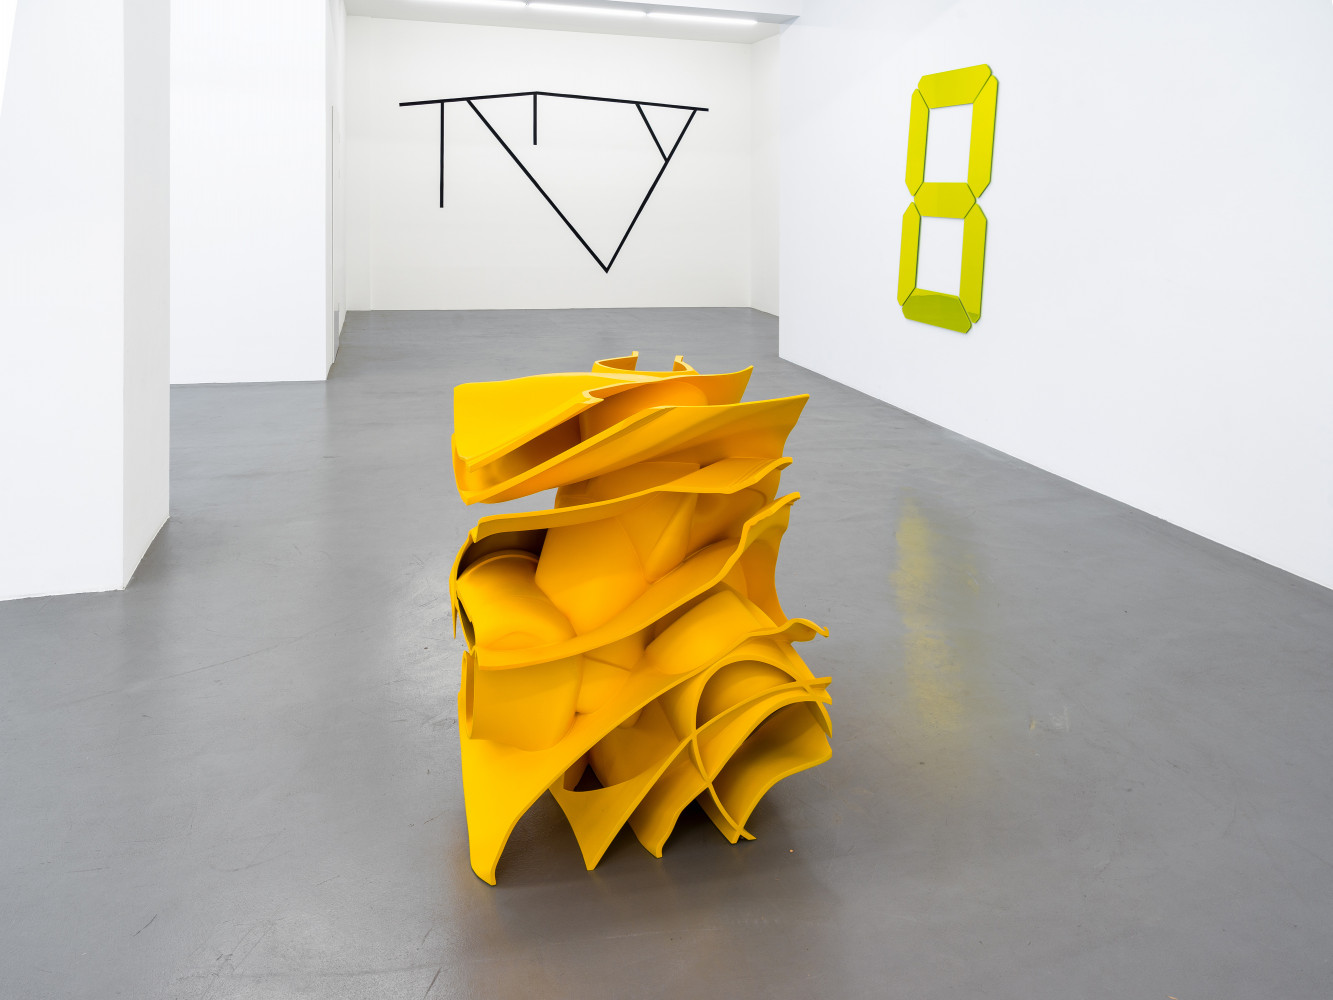 Tony Cragg, Tatsuo Miyajima, William Tucker, Installationsansicht, Buchmann Galerie, 2020